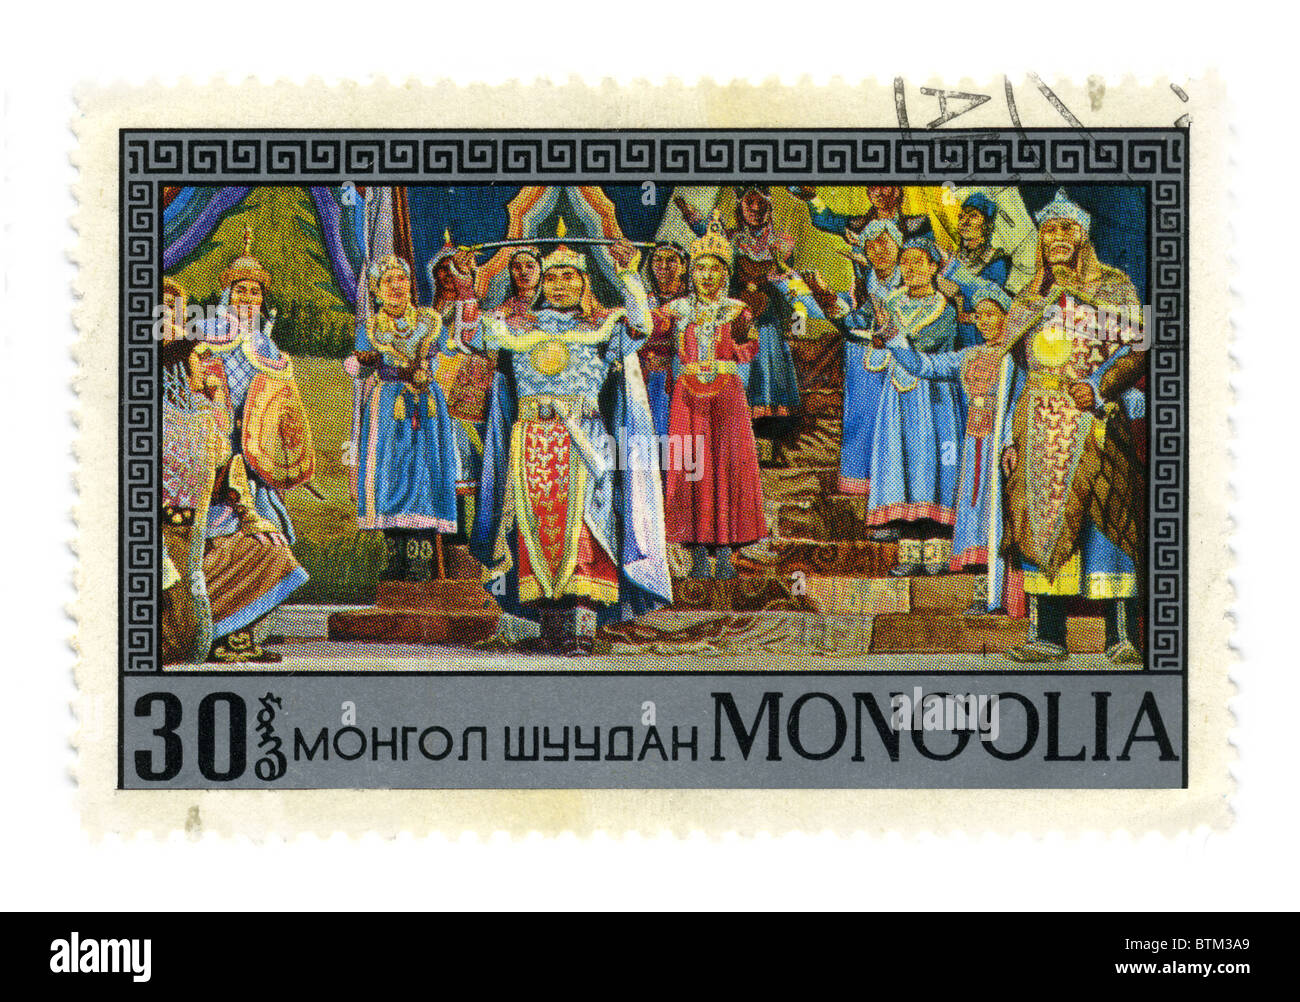 MONGOLIA - CIRCA 1973: A stamp printed in MONGOLIA shows image of the Mongolian epics circa 1973. Stock Photo